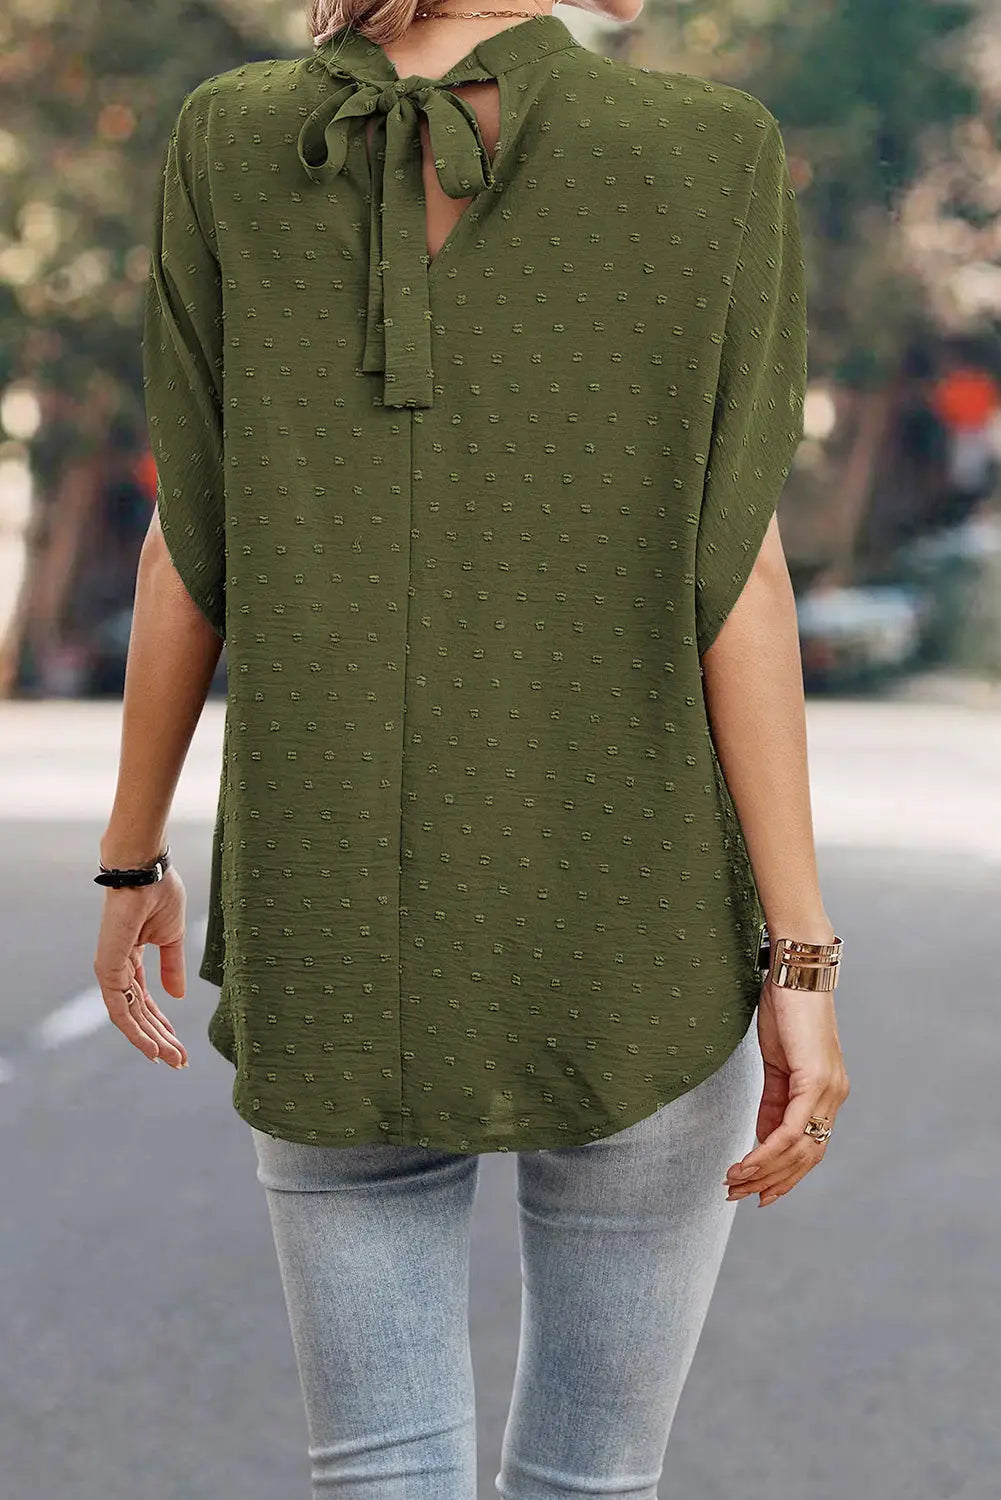 Mist green swiss dot mock neck batwing sleeve blouse - tops